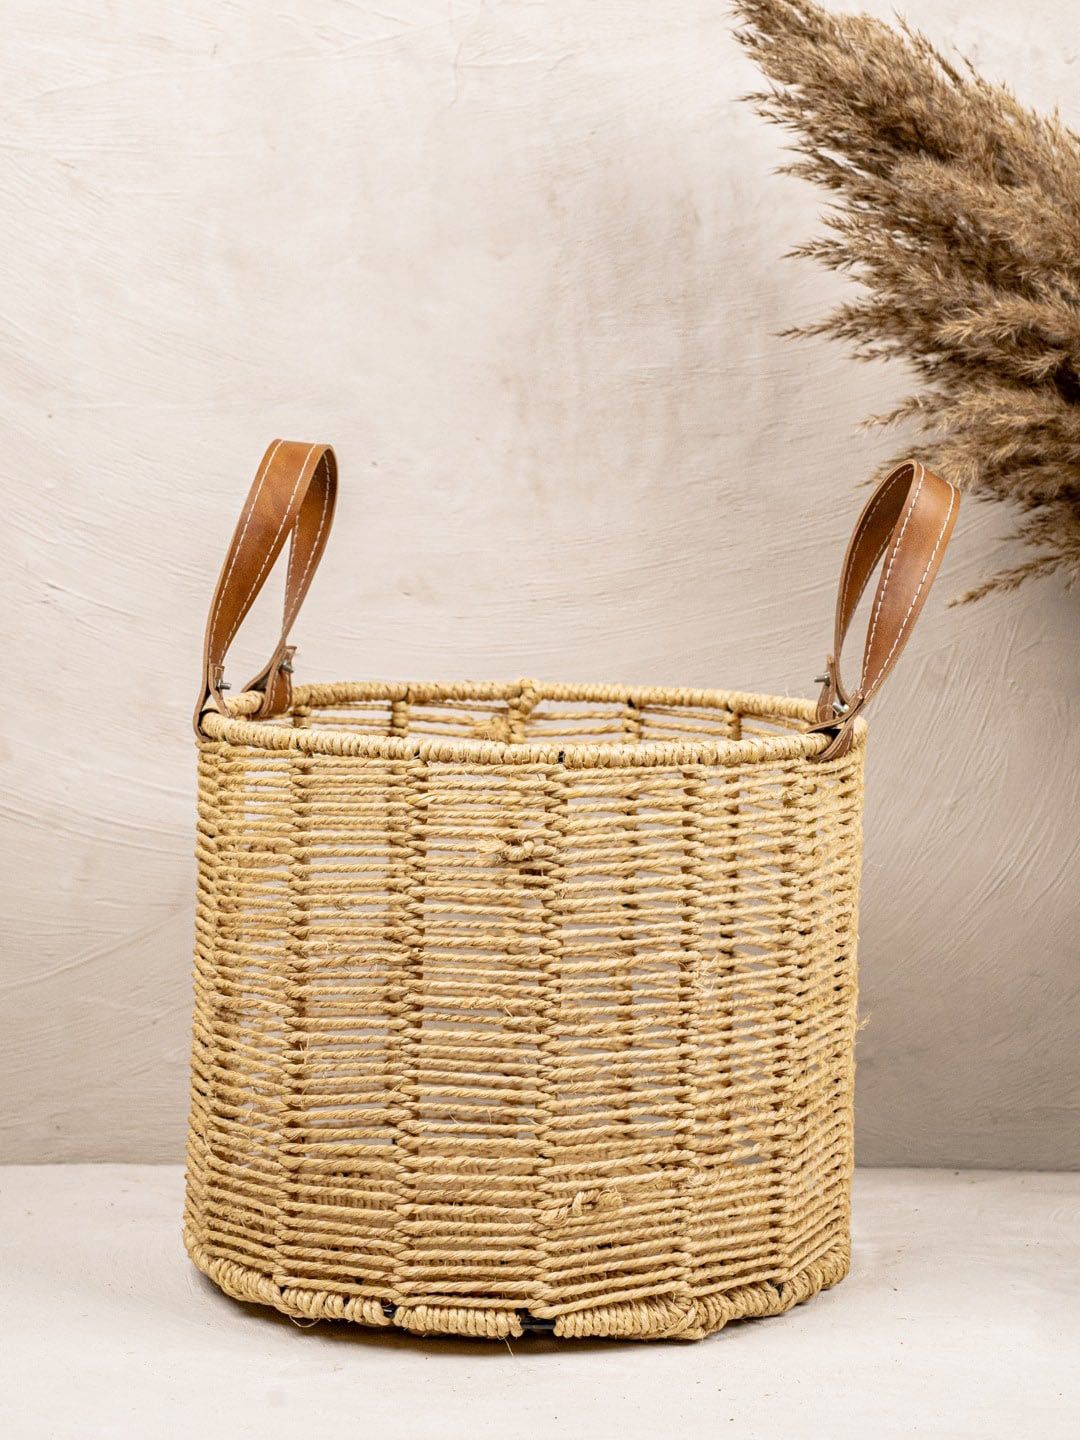 The 7 DeKor Textured Wooden Multipurpose Organiser Basket Price in India